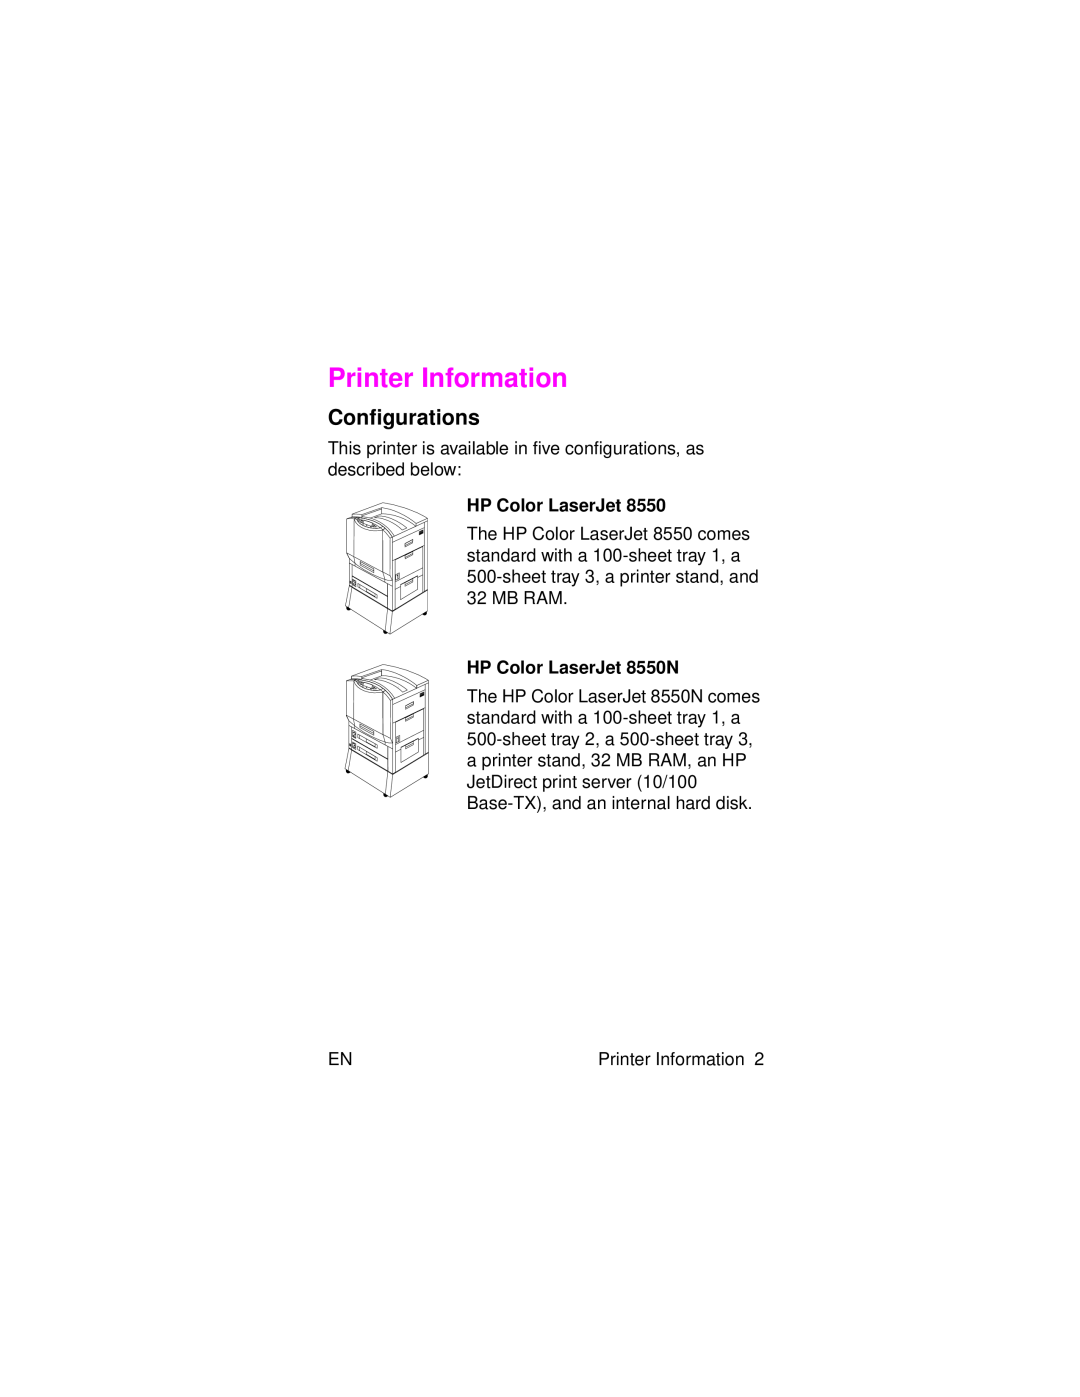 HP 8000 s manual Printer Information, Configurations, HP Color LaserJet 8550N 